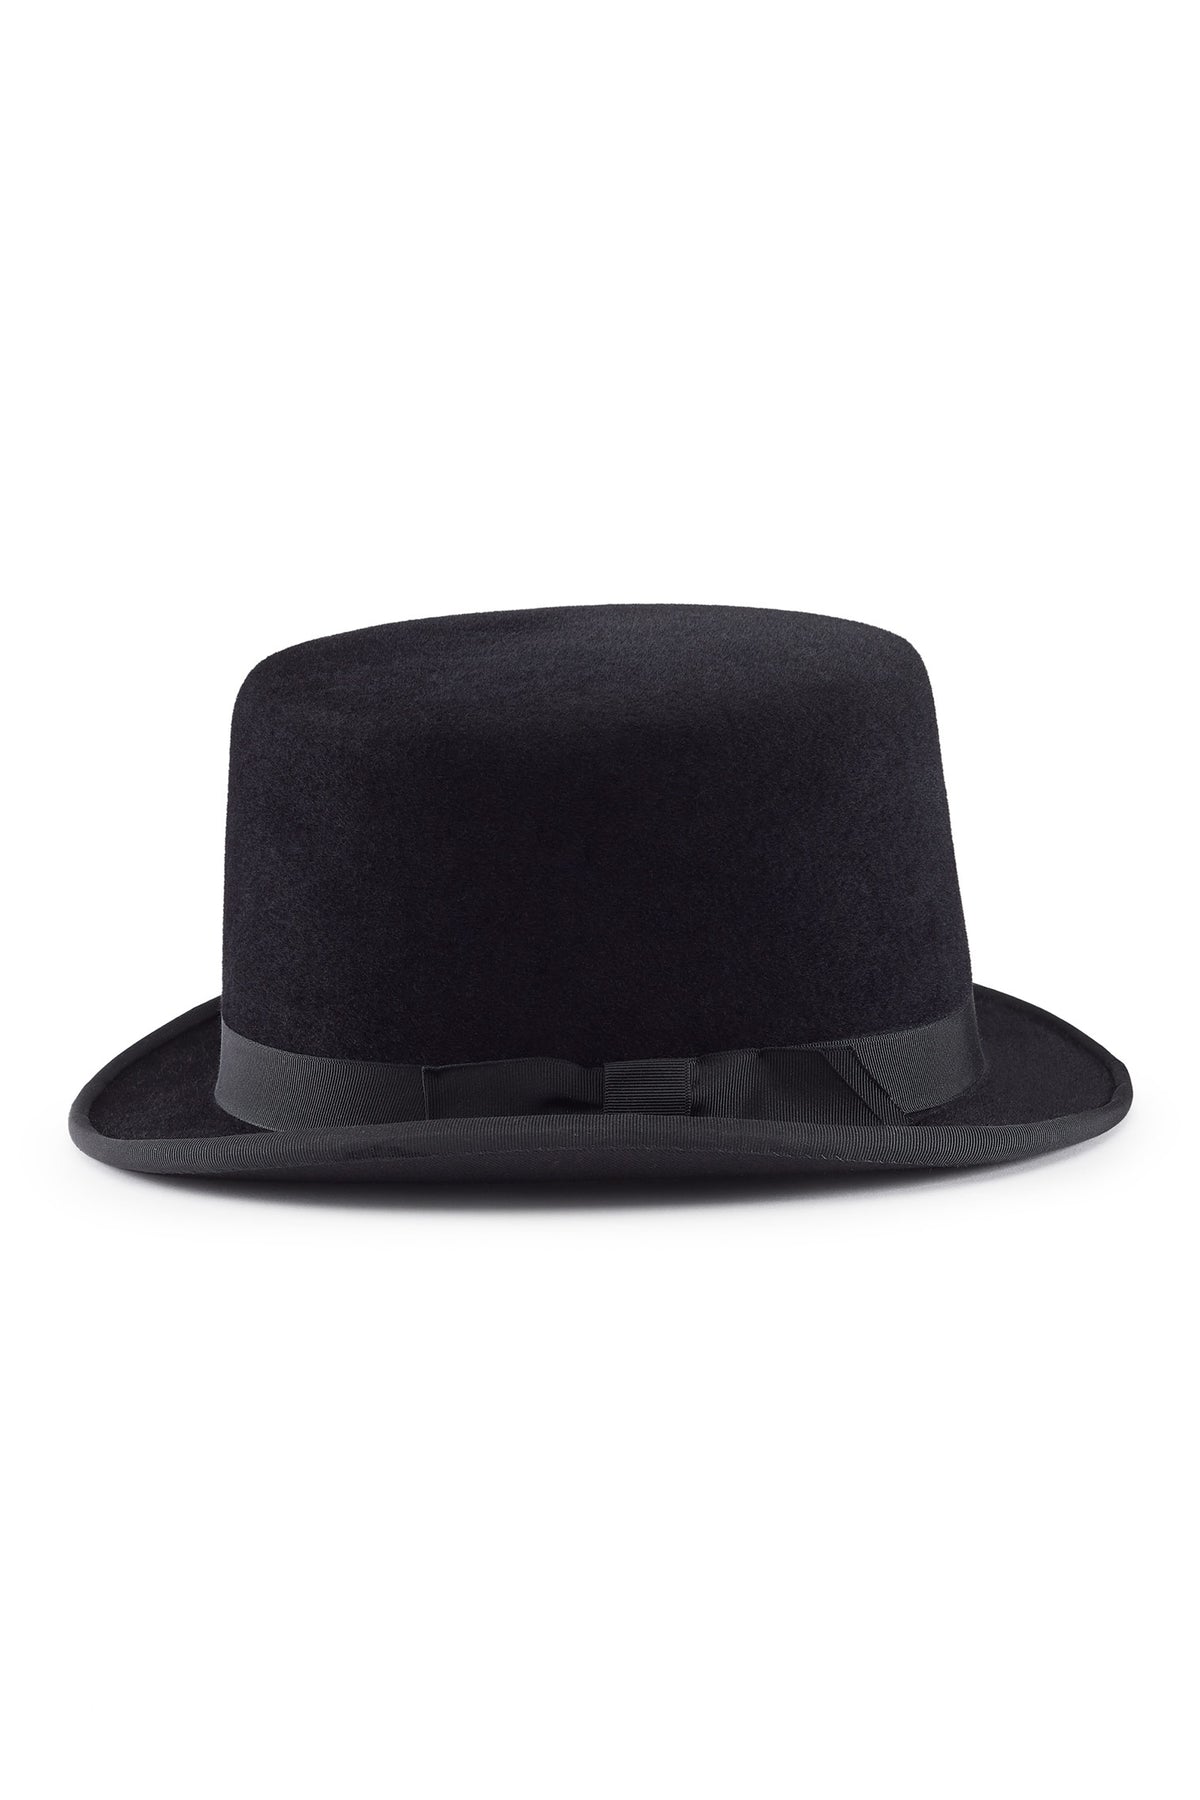 Cambridge Bowler Hat - Lock & Co. Hats For Men & Women Black / 56 cm - Lock & Co. Hatters Mens Hats